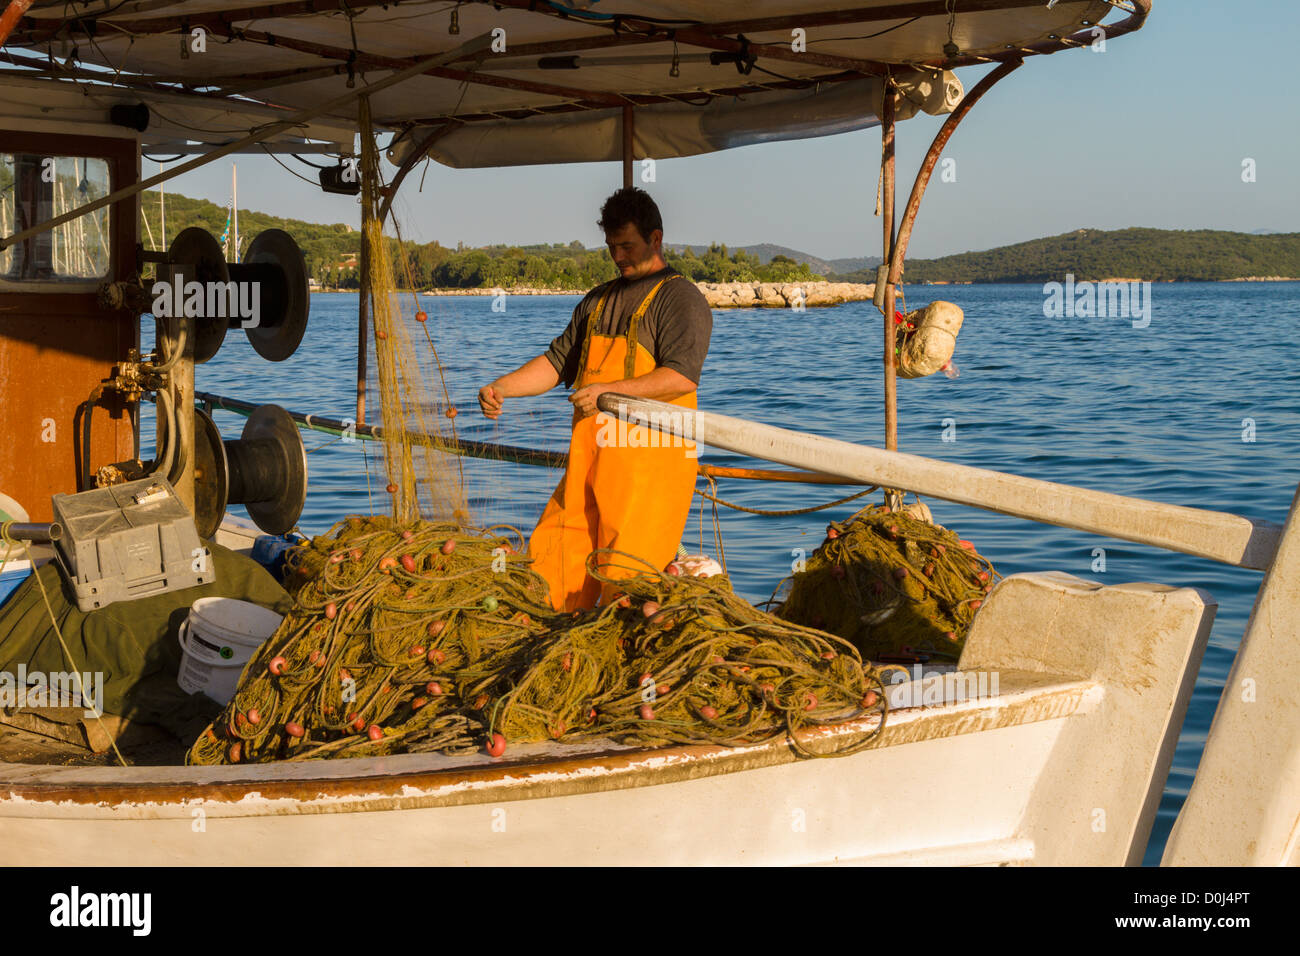 Fisherman on his boat, checking his nets, Vonitsa, Ambracian Gulf, Greece Stock Photo